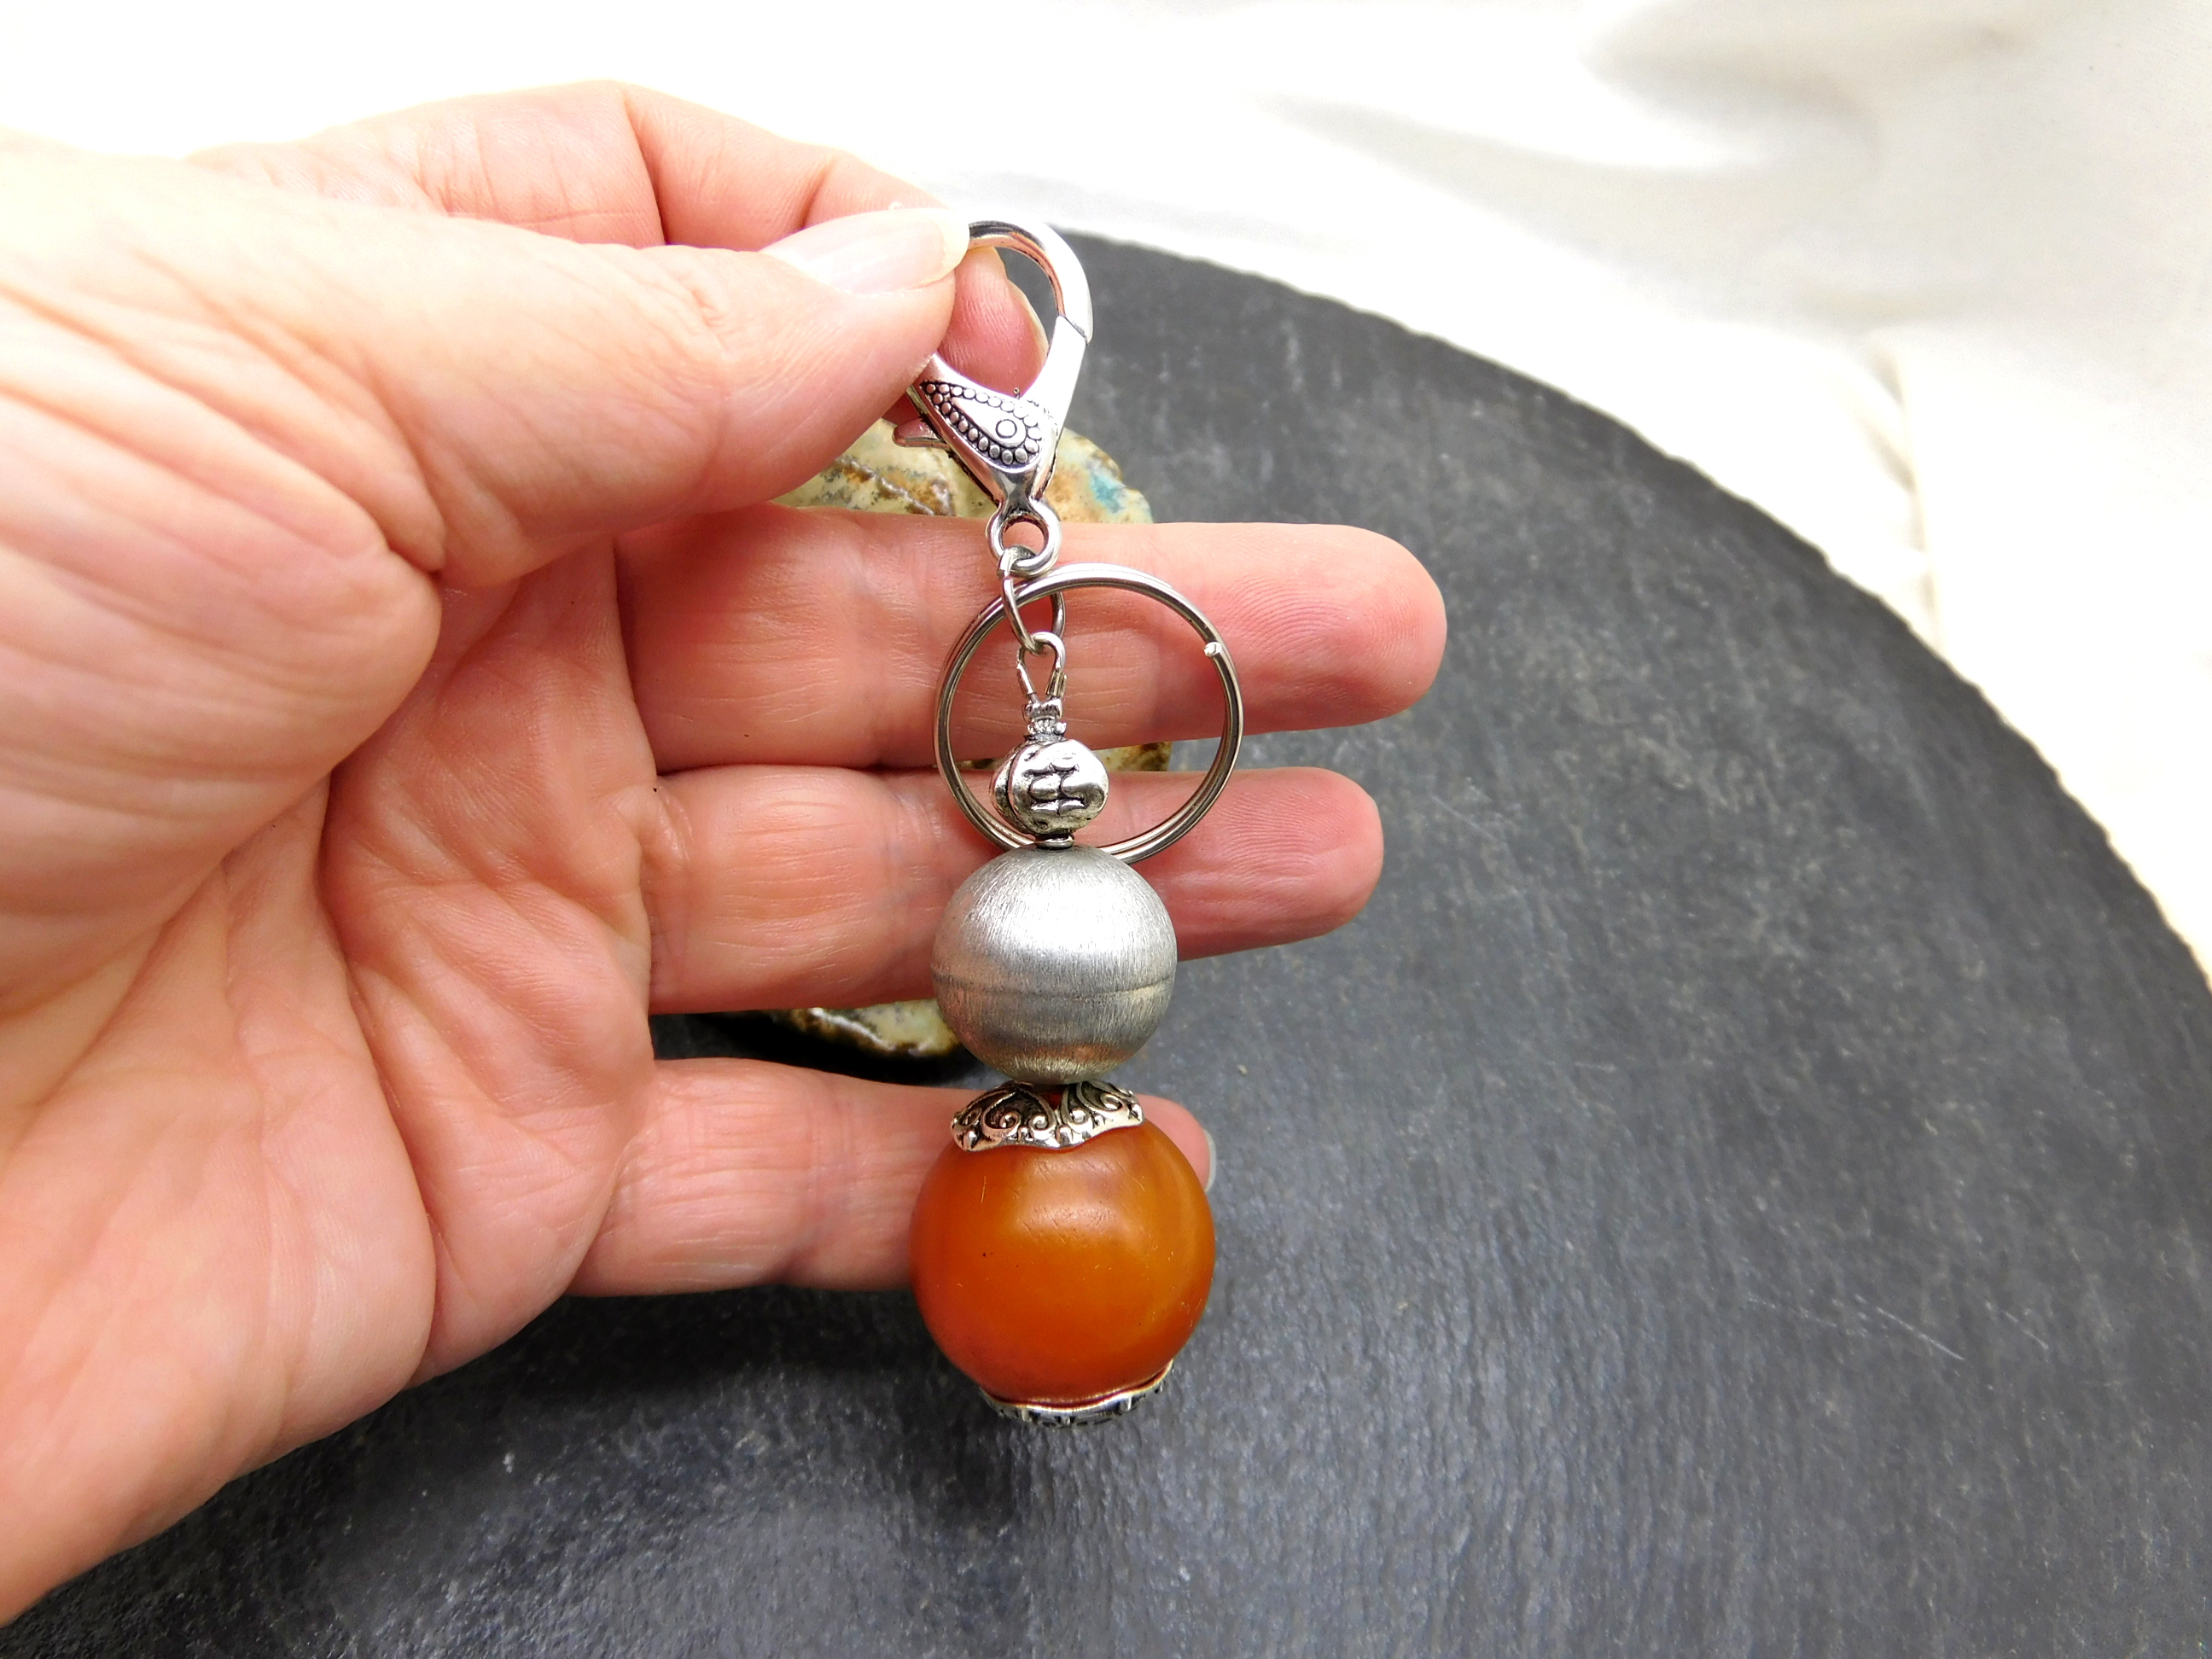 keychain / bag charm with resin amber bead